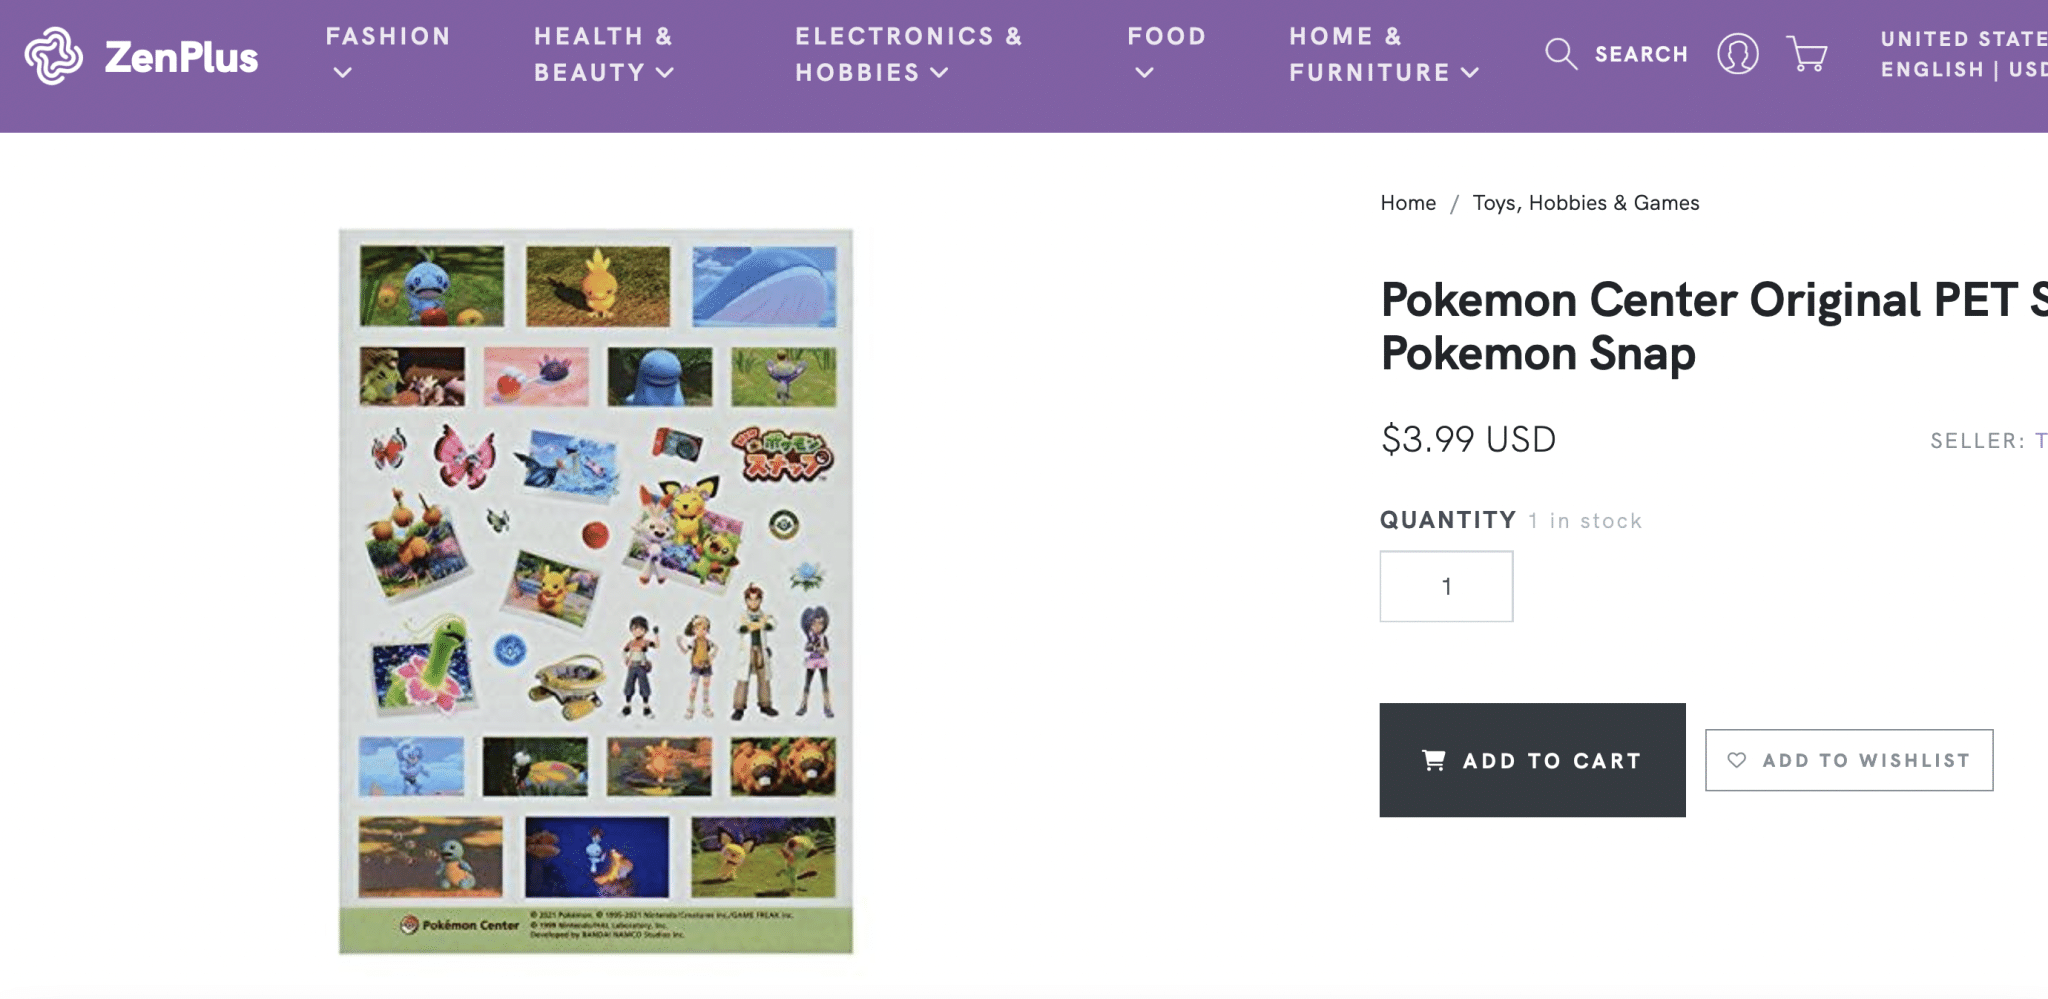 Pokémon Snap stickers